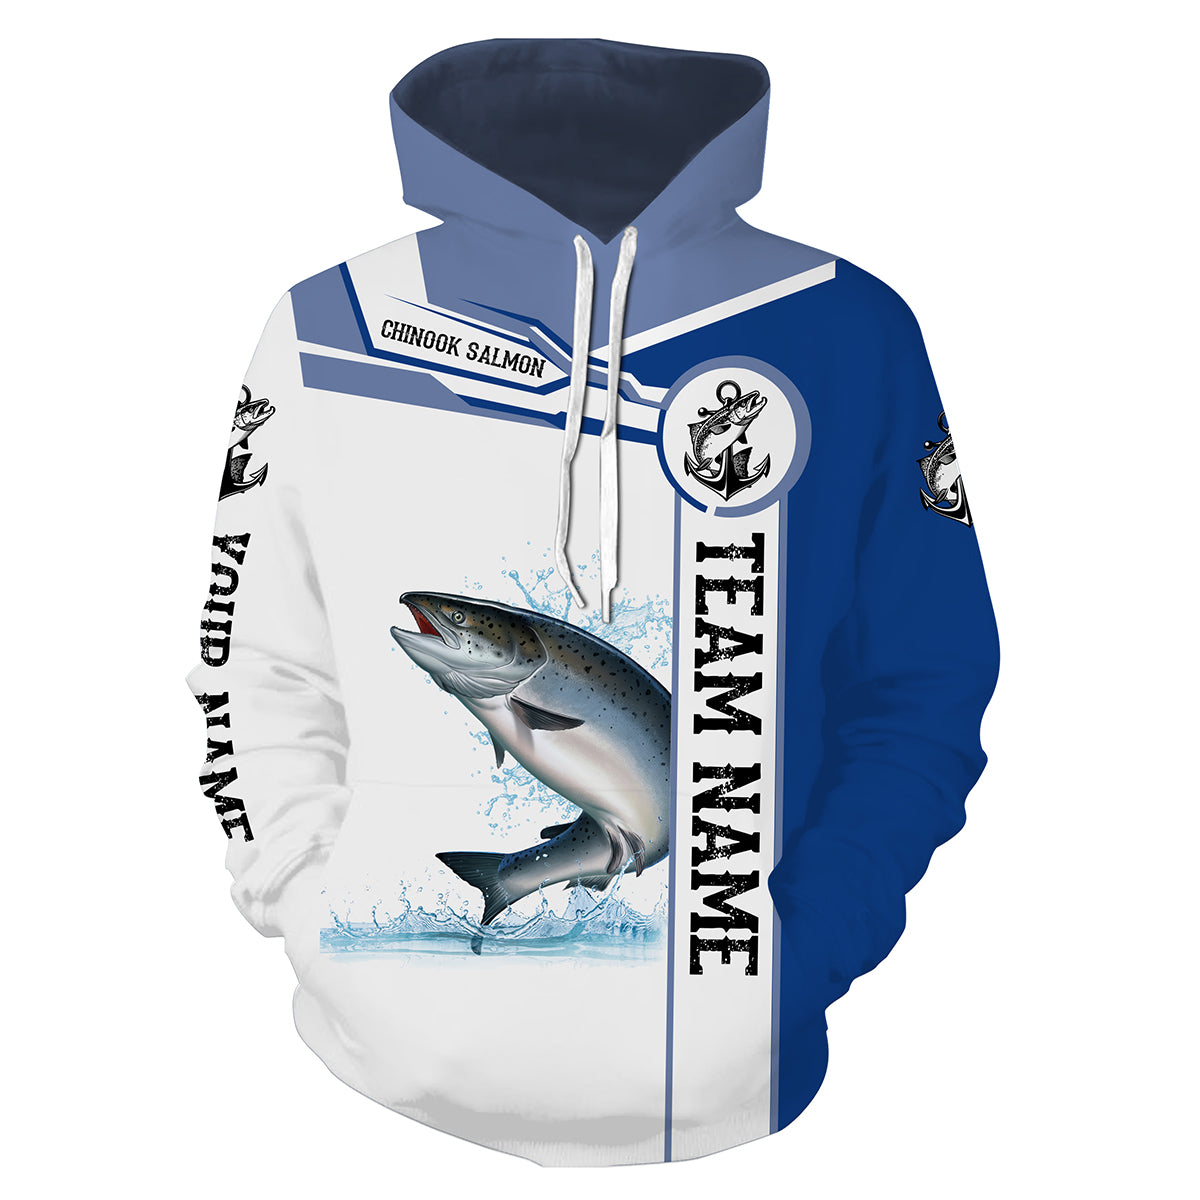 Chinook salmon fishing tournament Blue shirts Customize name and team